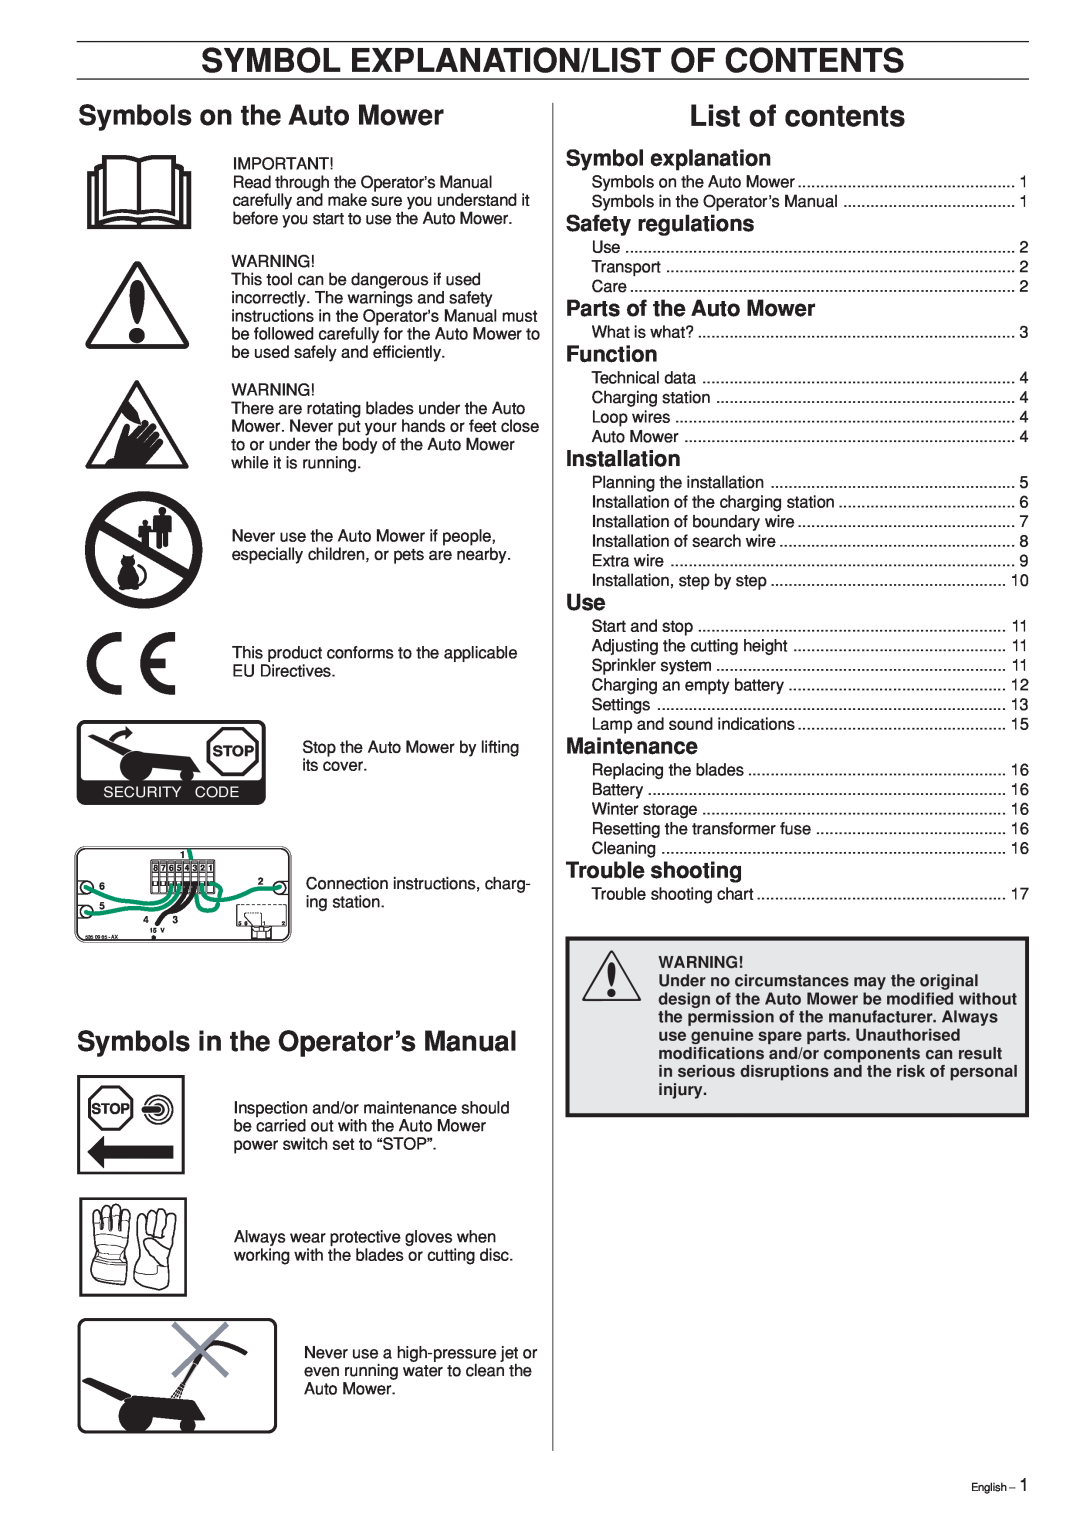 Husqvarna Robotic Lawn Mower Symbol Explanation/List Of Contents, Symbols on the Auto Mower, Symbol explanation, Function 